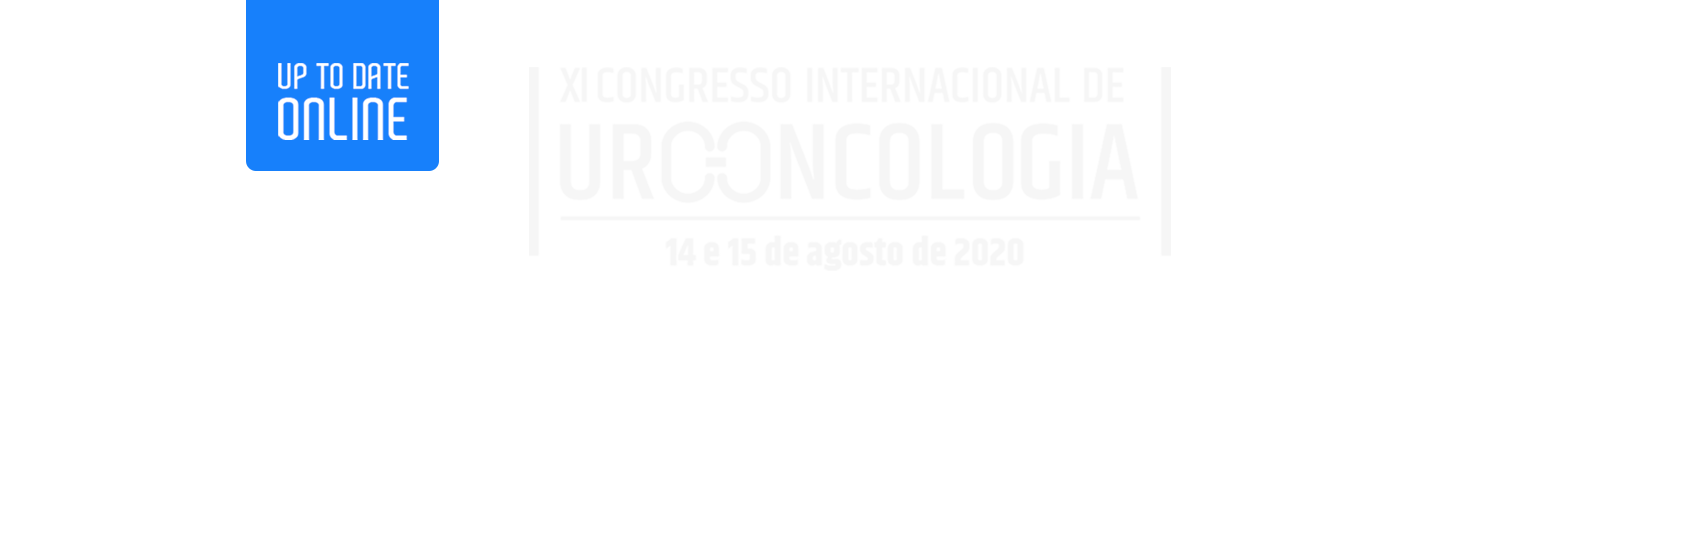 XI Congresso Internacional de Uro-Oncologia